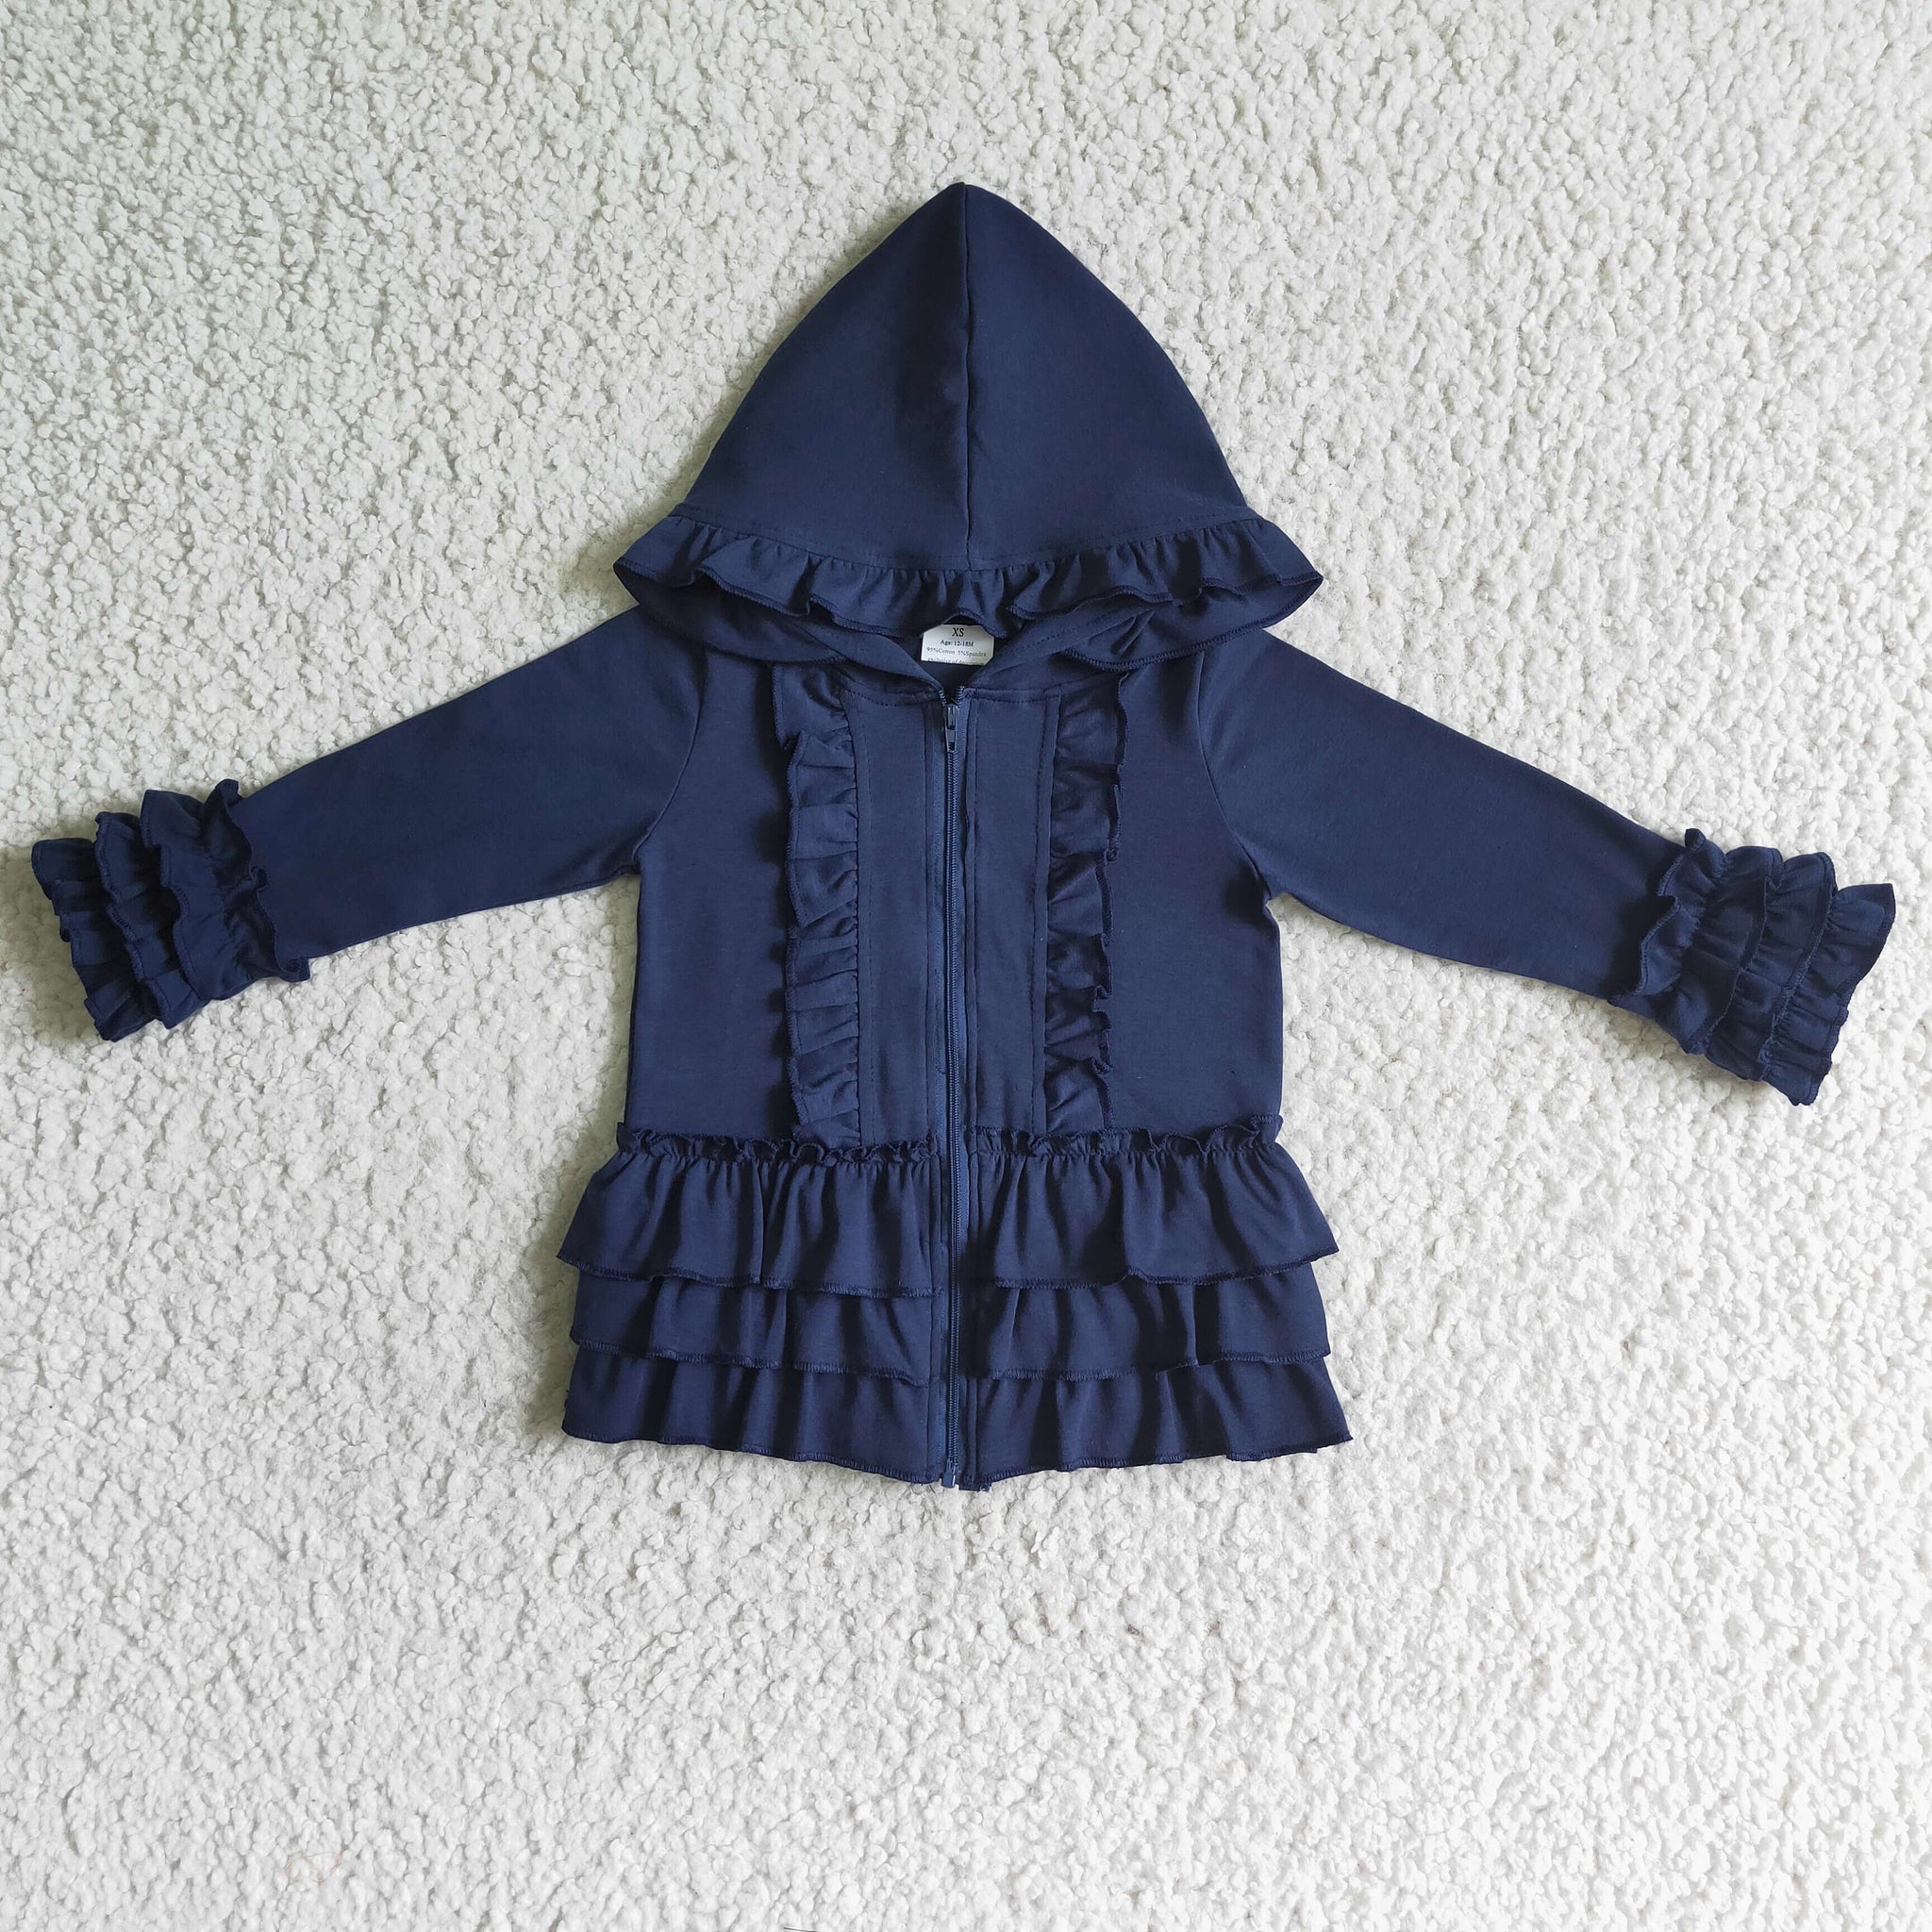 GT0013 baby girl clothes navy ruffles cotton winter coat jacket